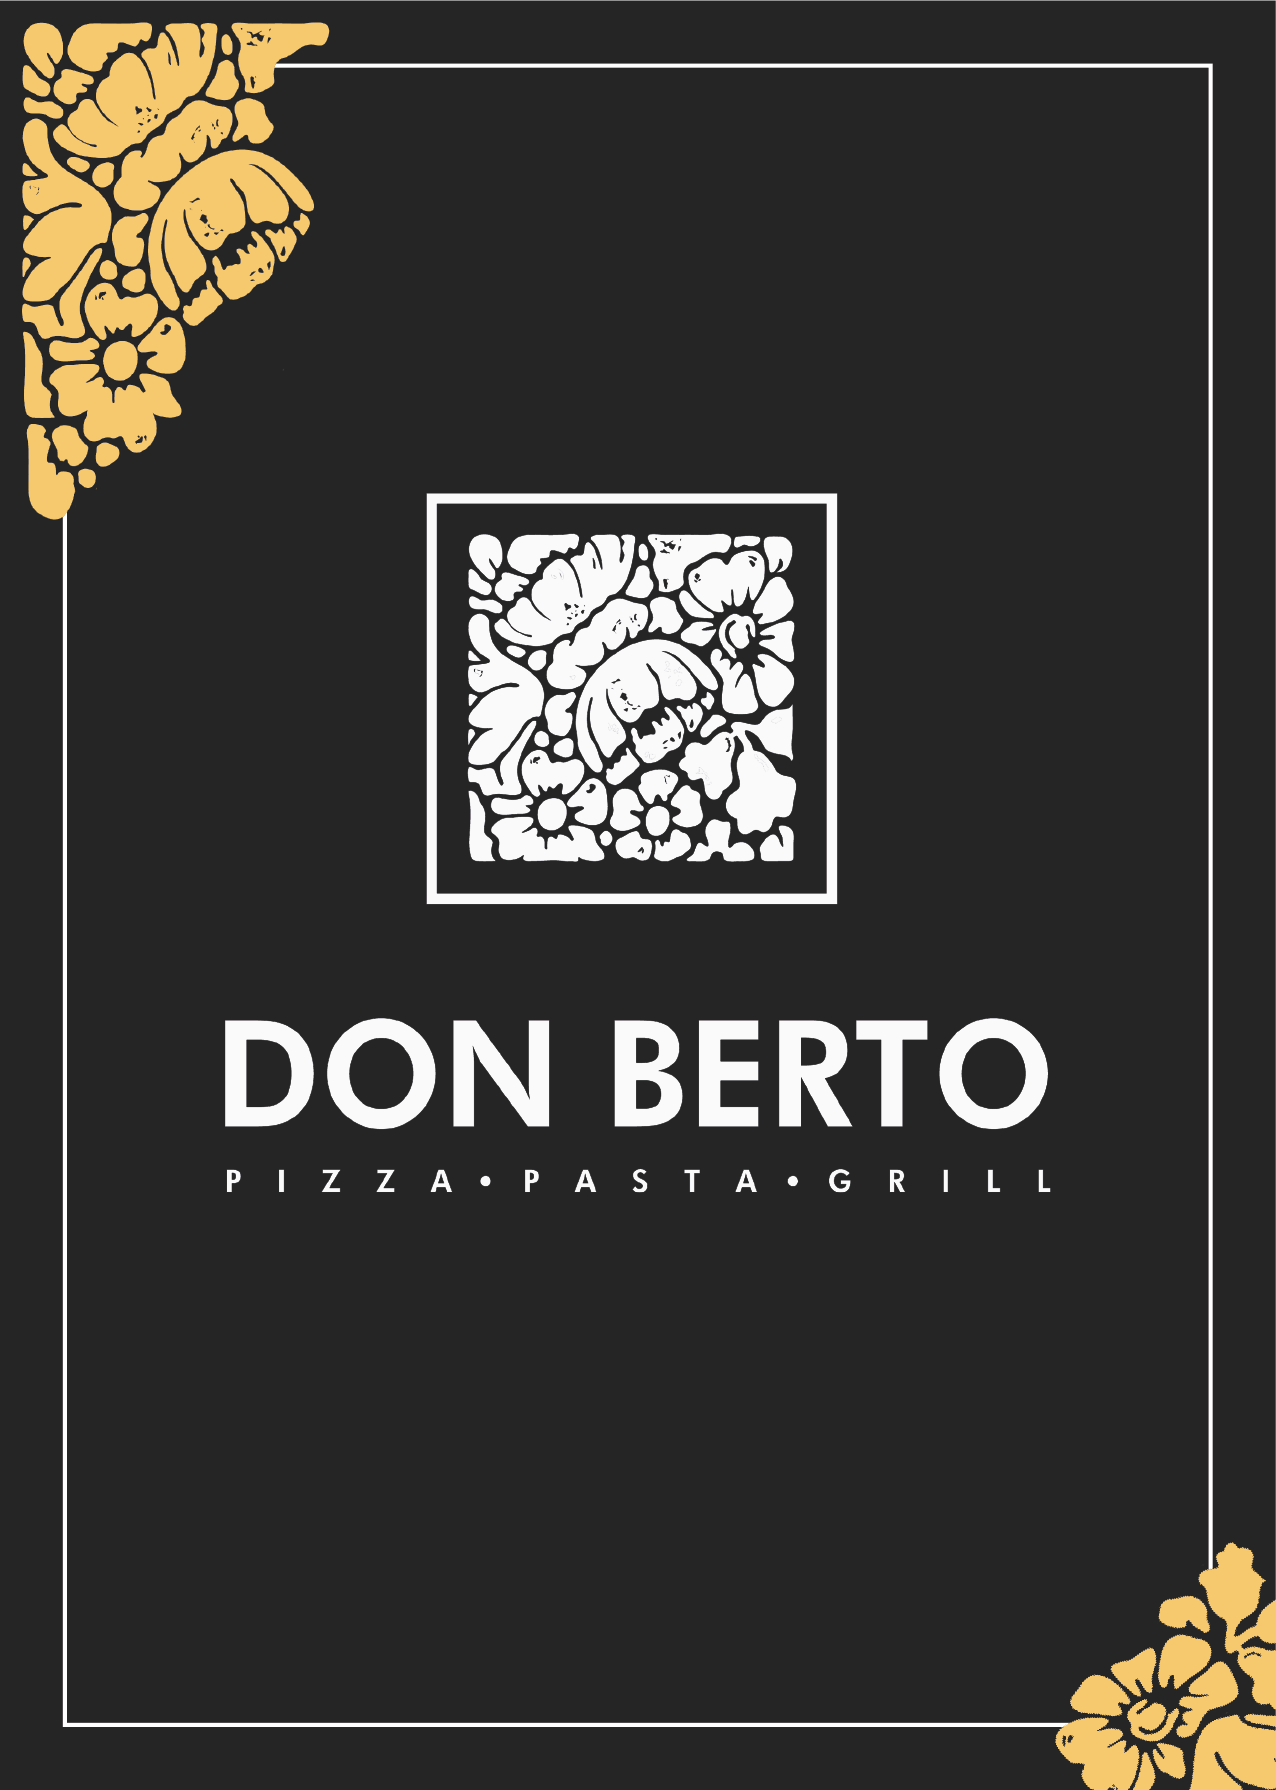 Don Berto Menu Design Front Page